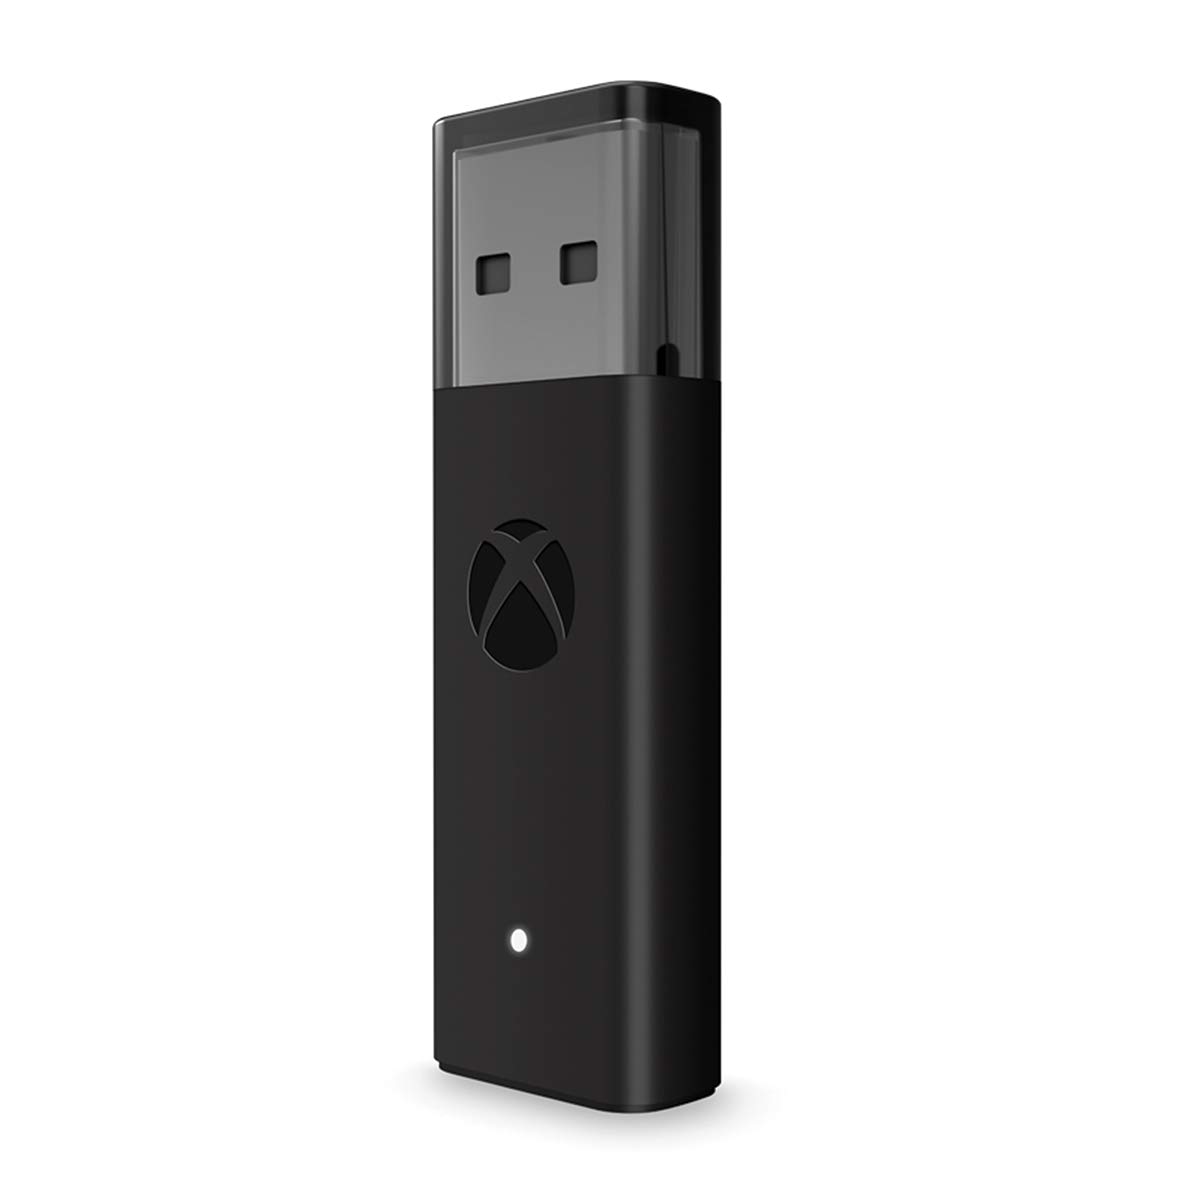 Microsoft Xbox Wireless Controller + Wireless Adapter for Windows 10